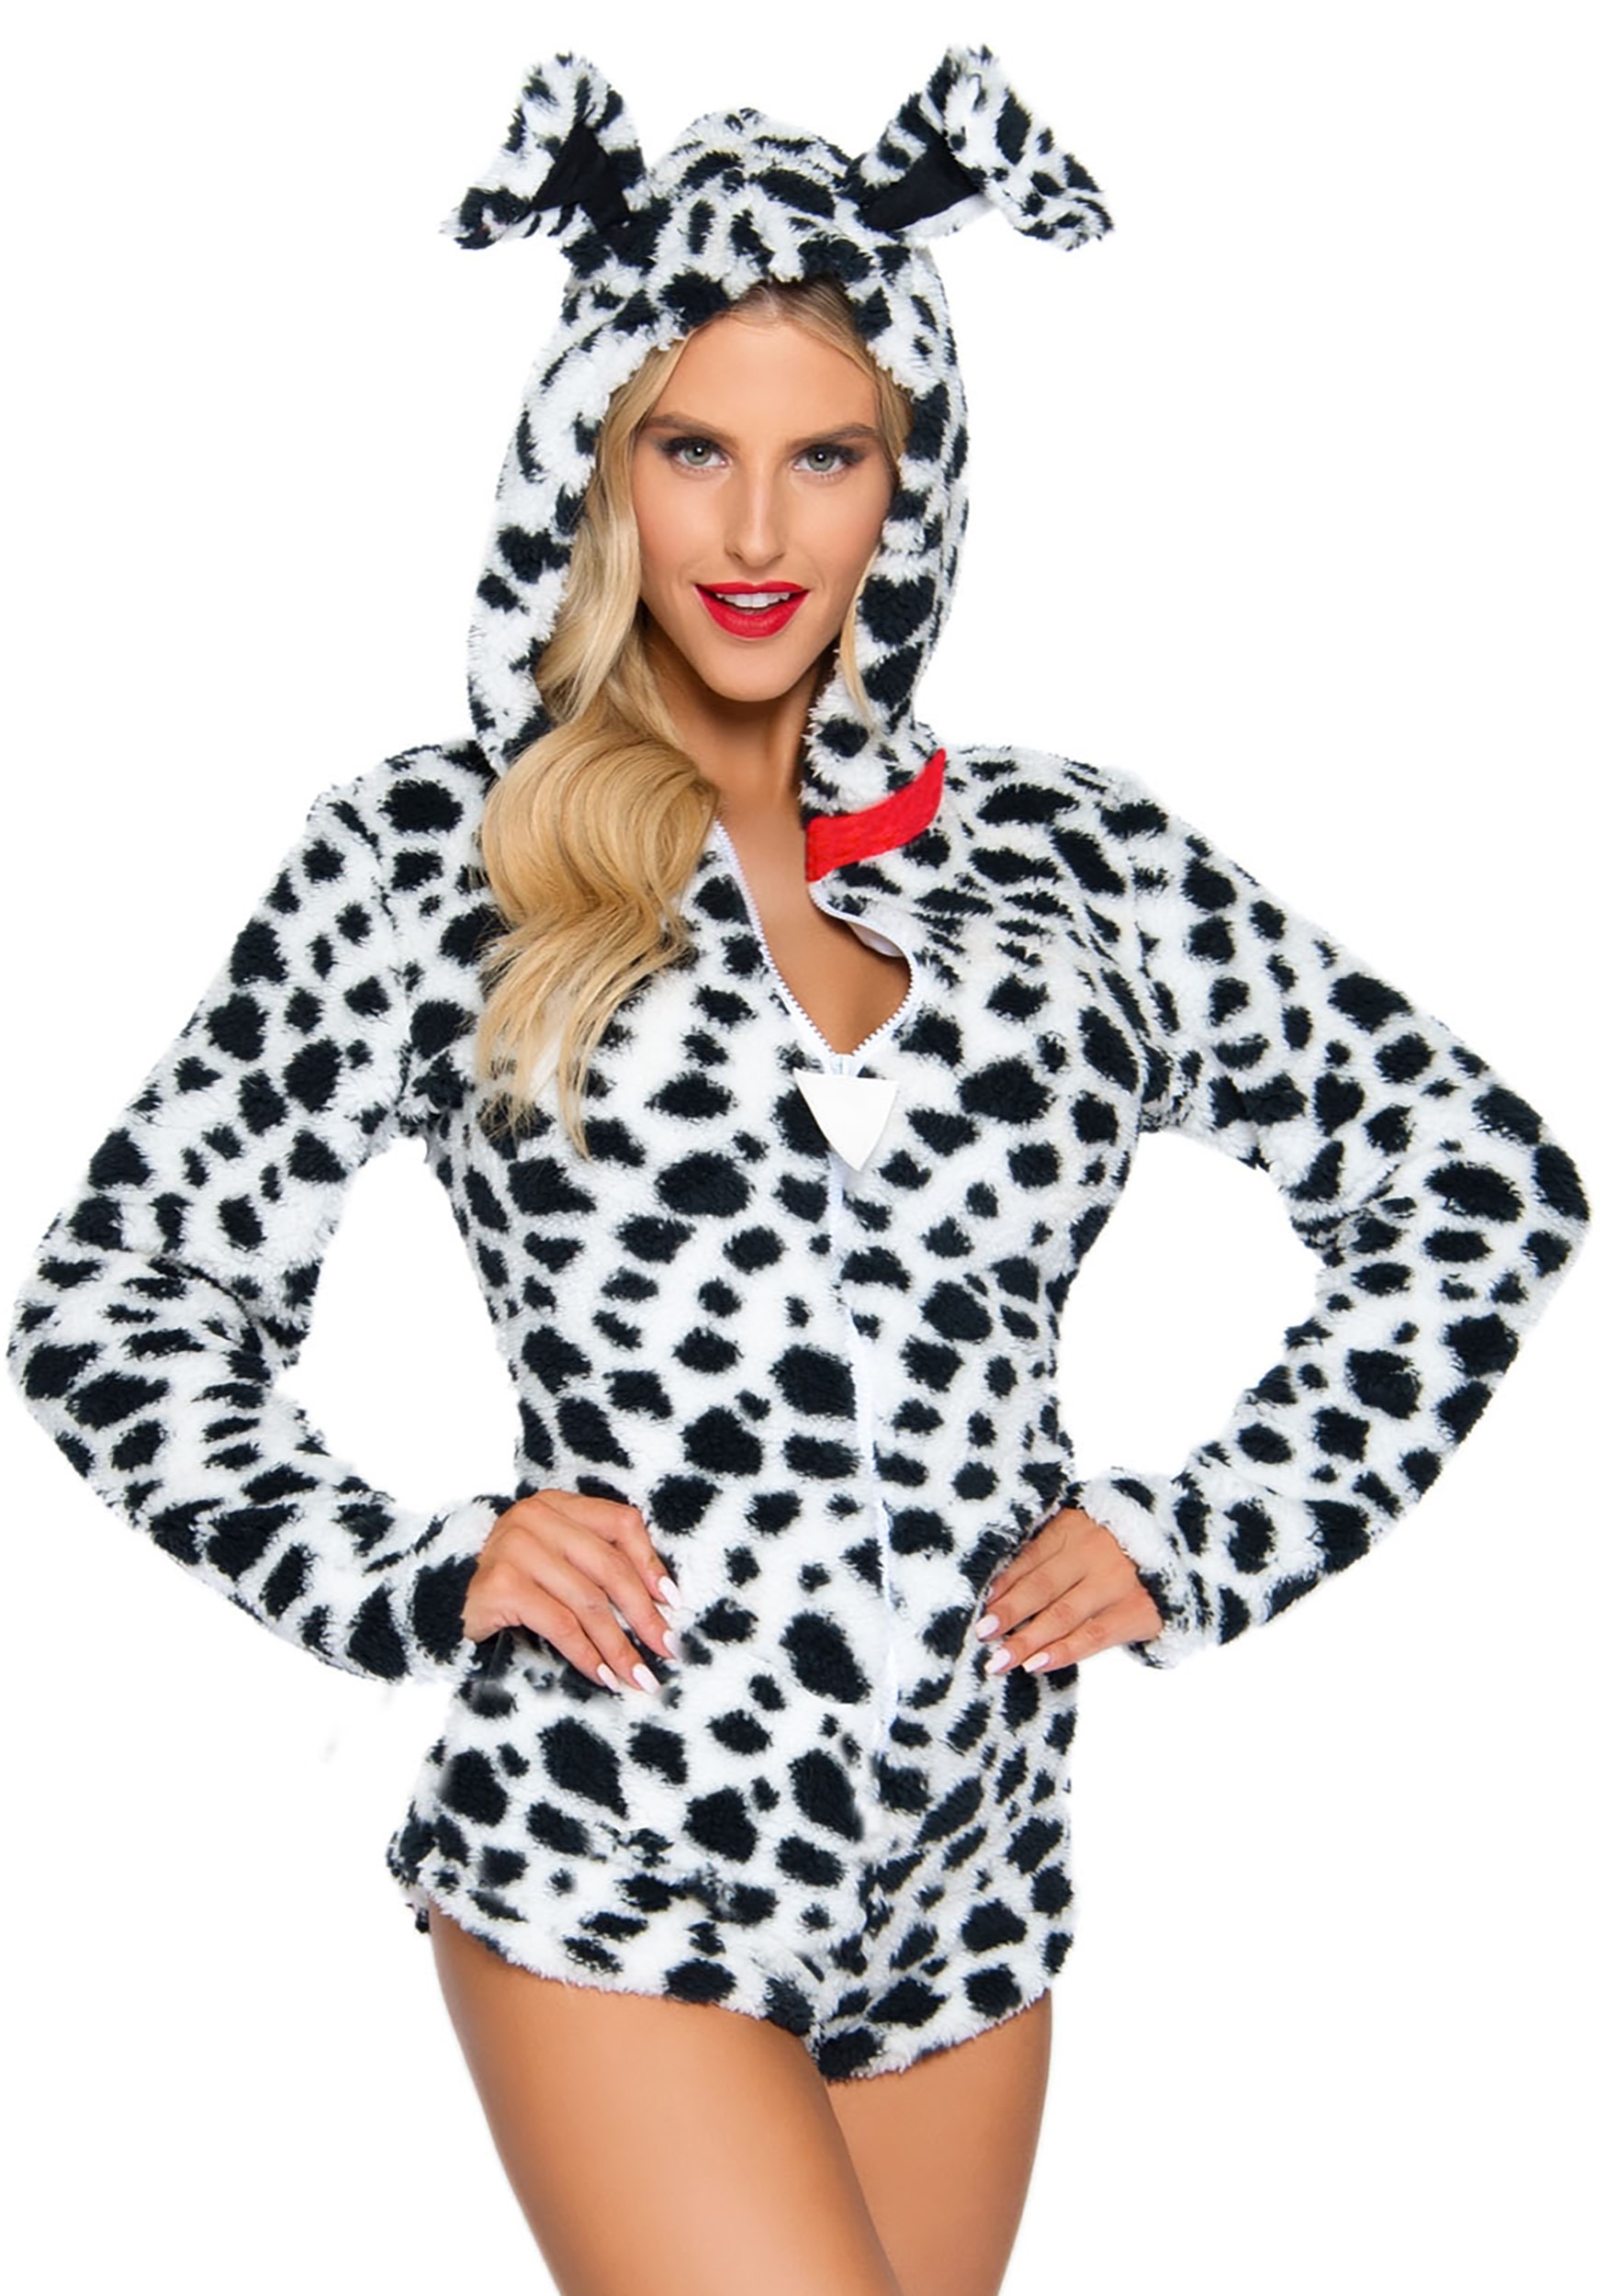 Darling Dalmatian Fancy Dress Costume For Women